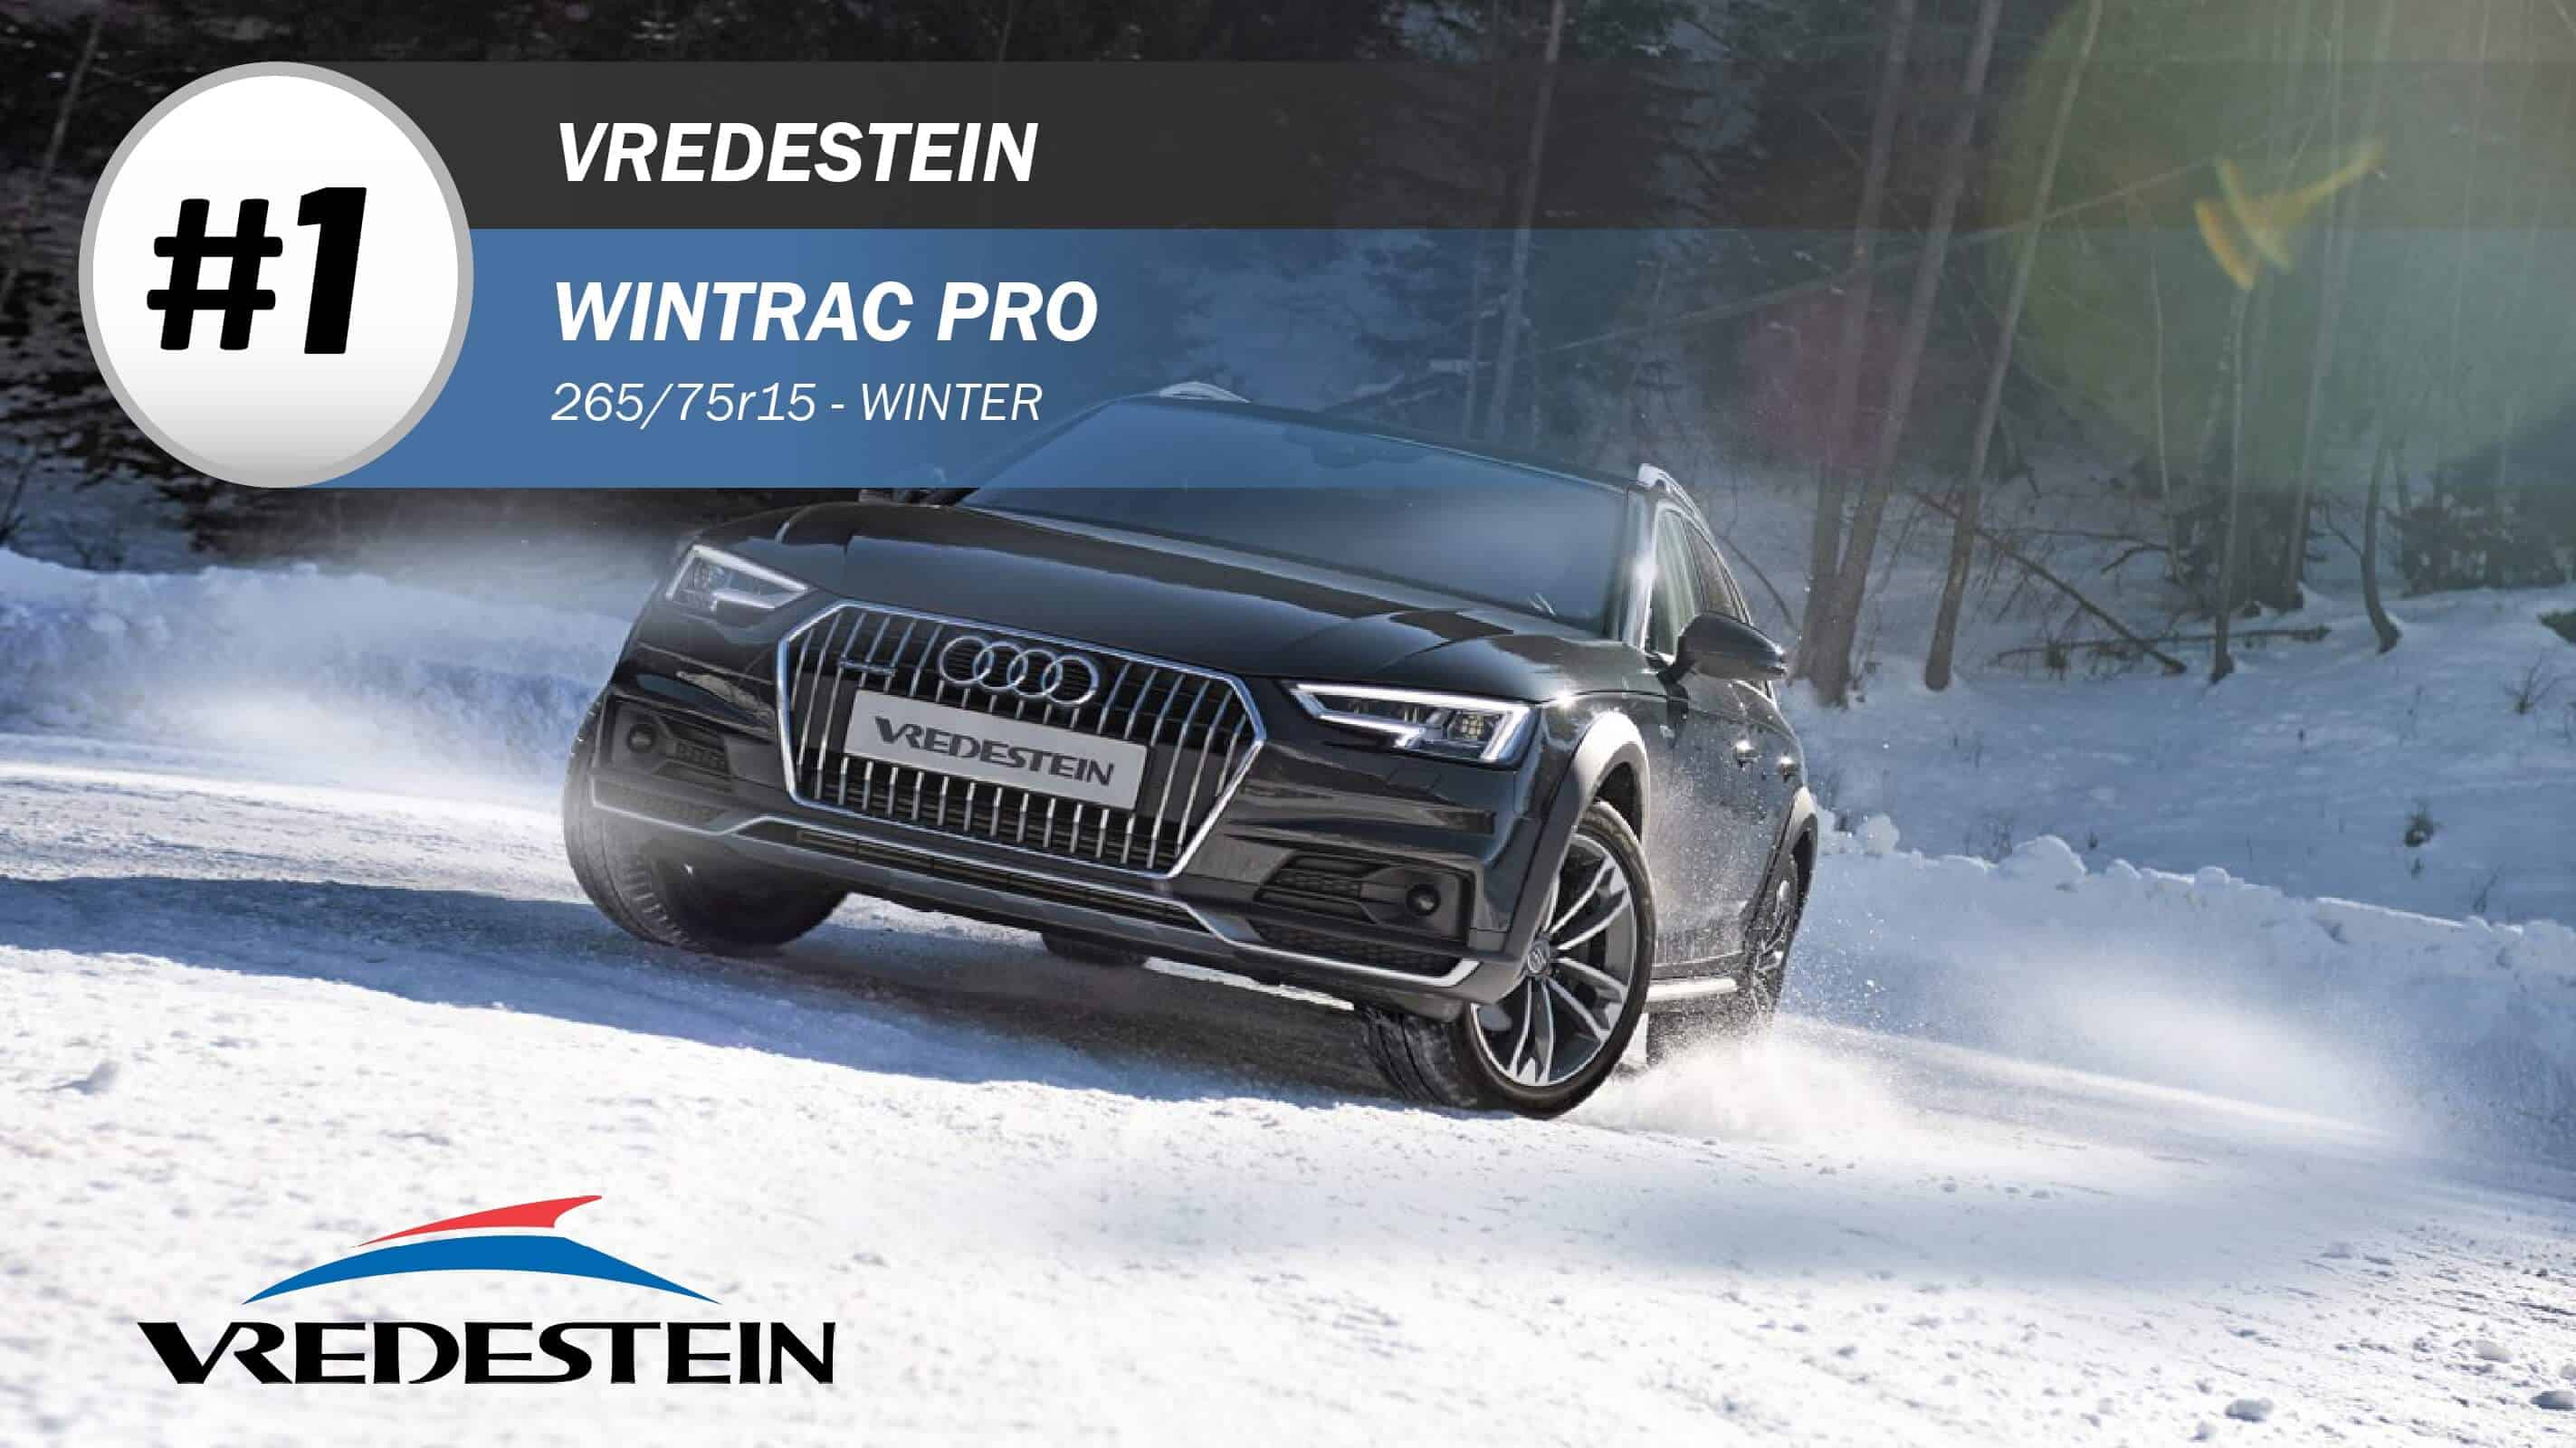 Top #1 Winter Tires: Vredestein Wintrac Pro – 265/75R15